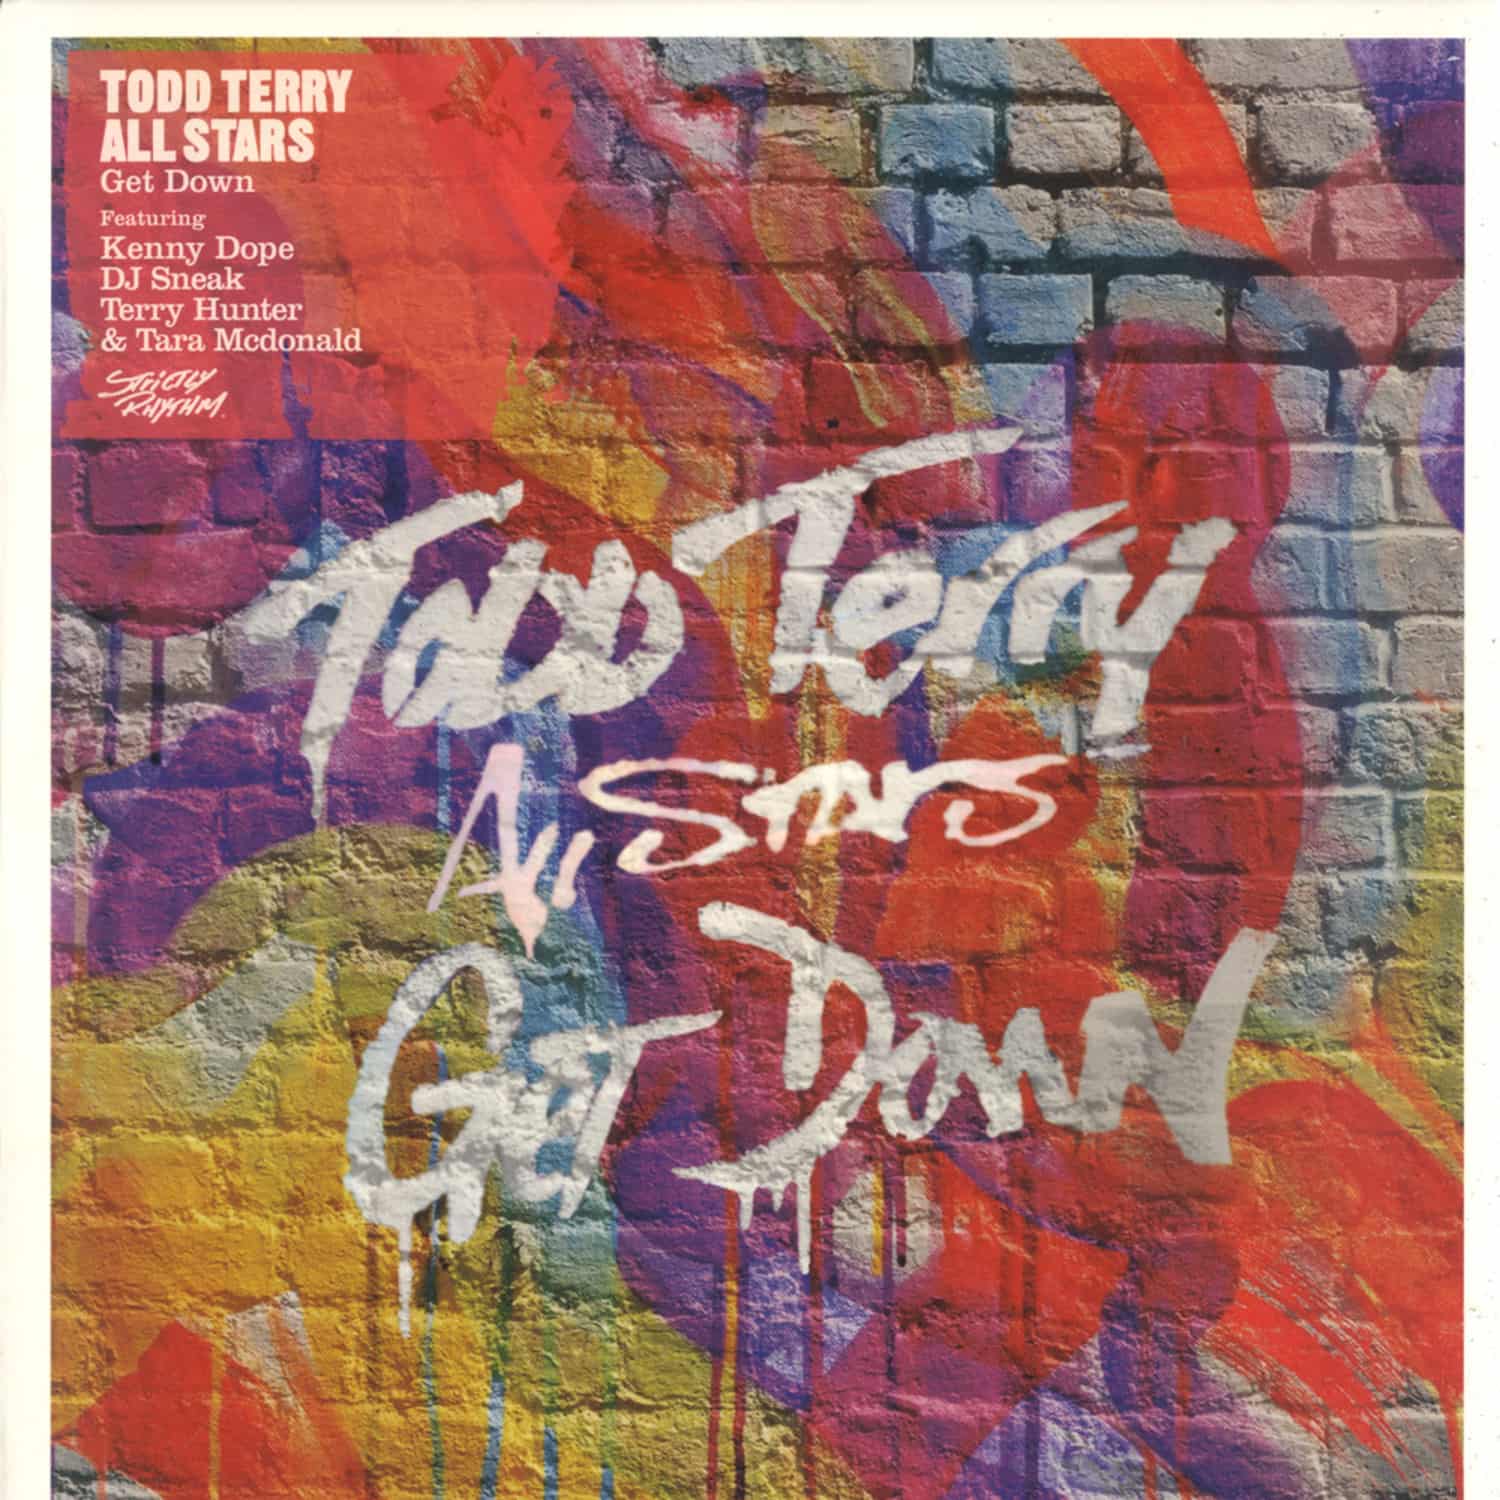 Todd Terry Allstars - GET DOWN